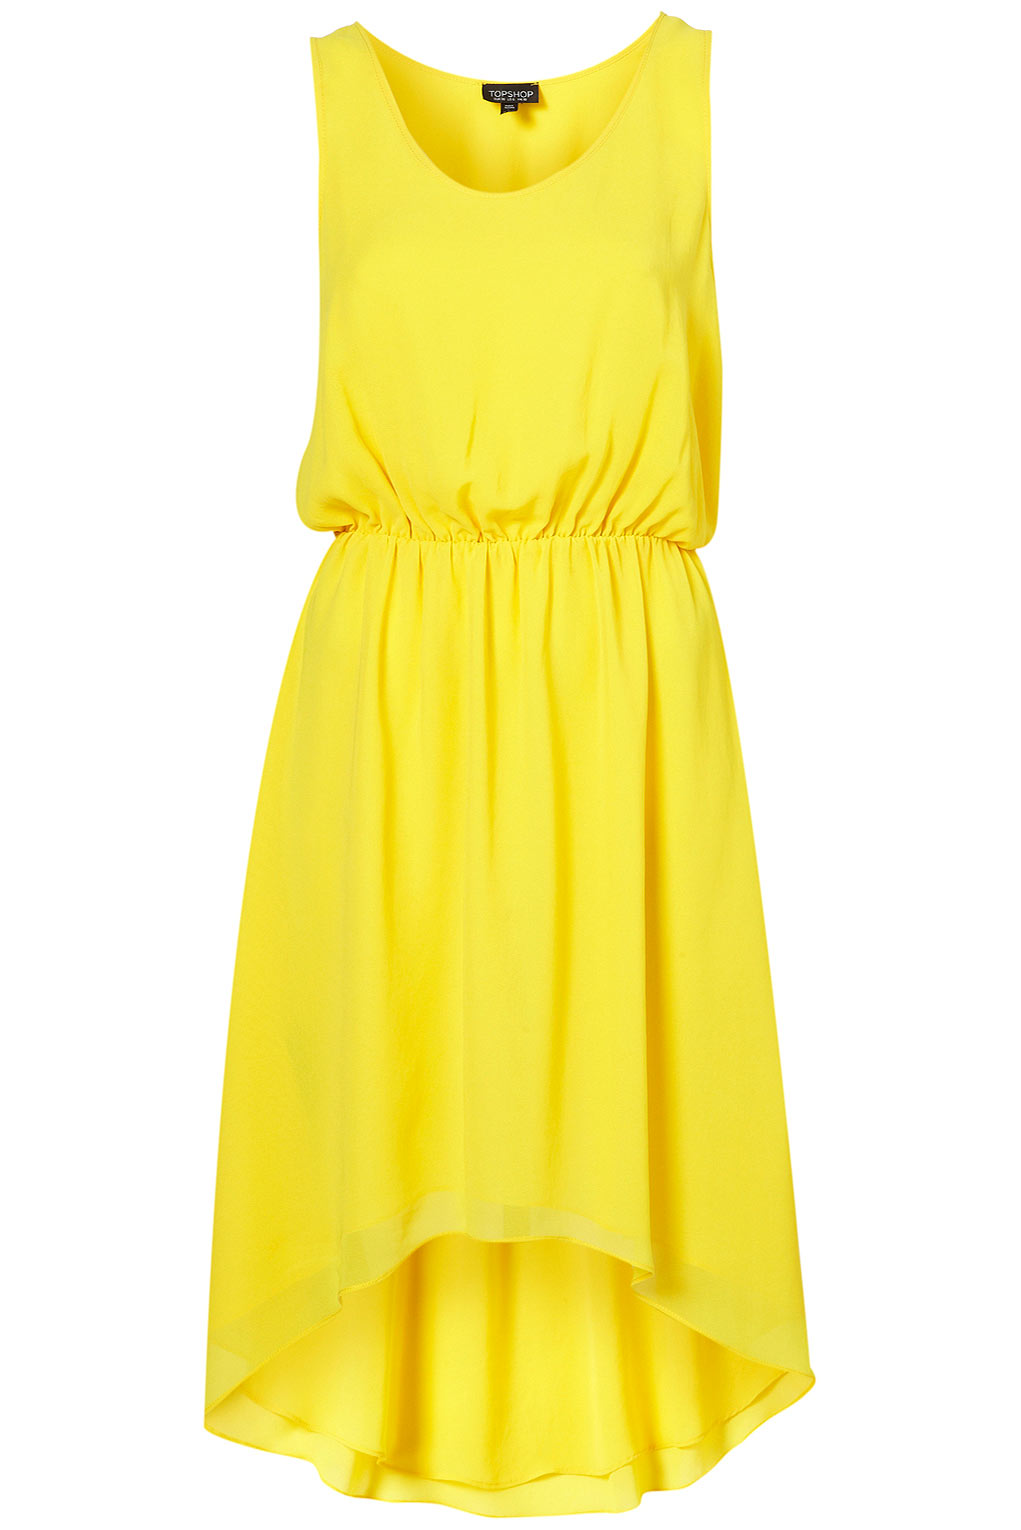 Topshop Chiffon Dip Hem Dress in Yellow